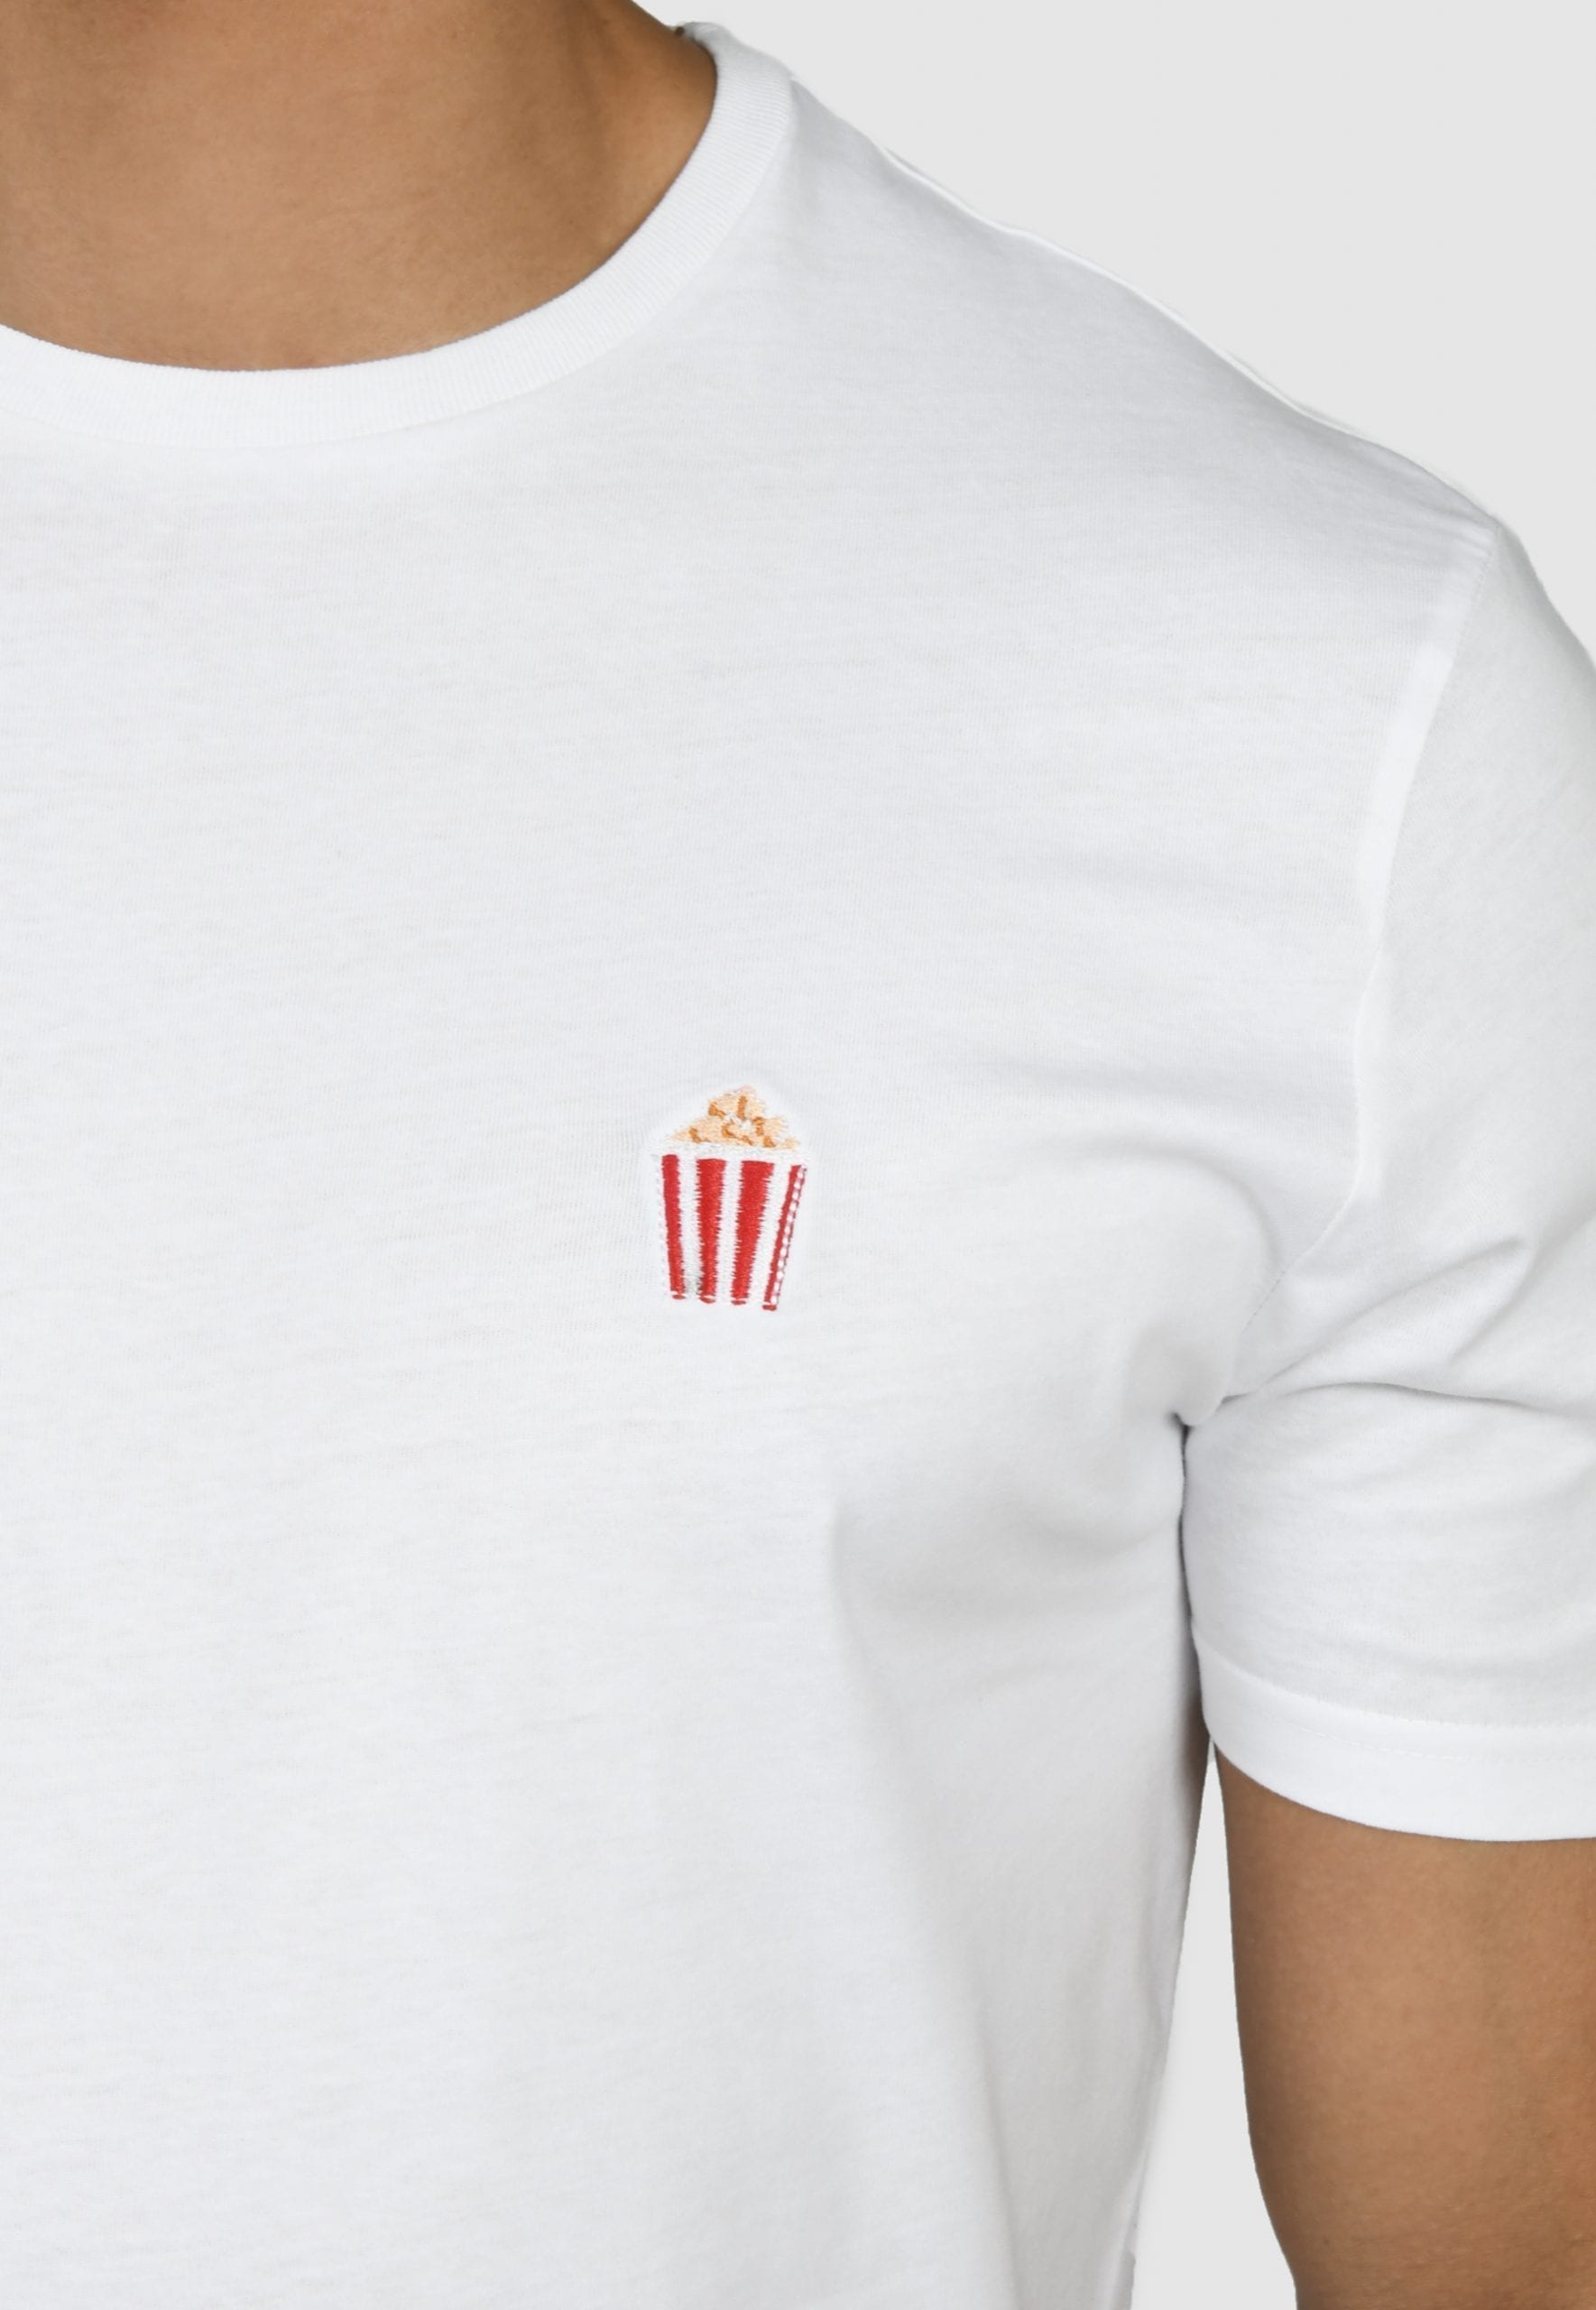 Popcorn coco Swim Trunks and T-shirt Bundle